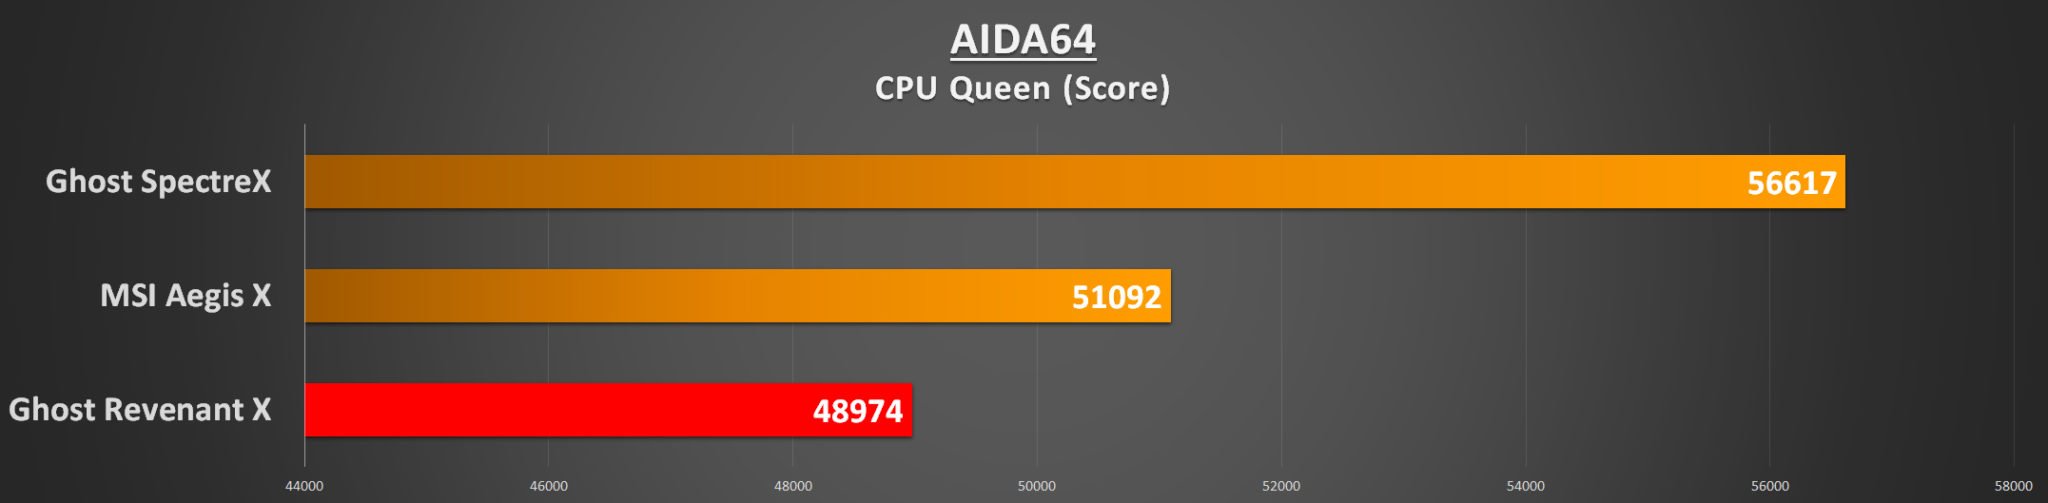 aida64-cpu-queen